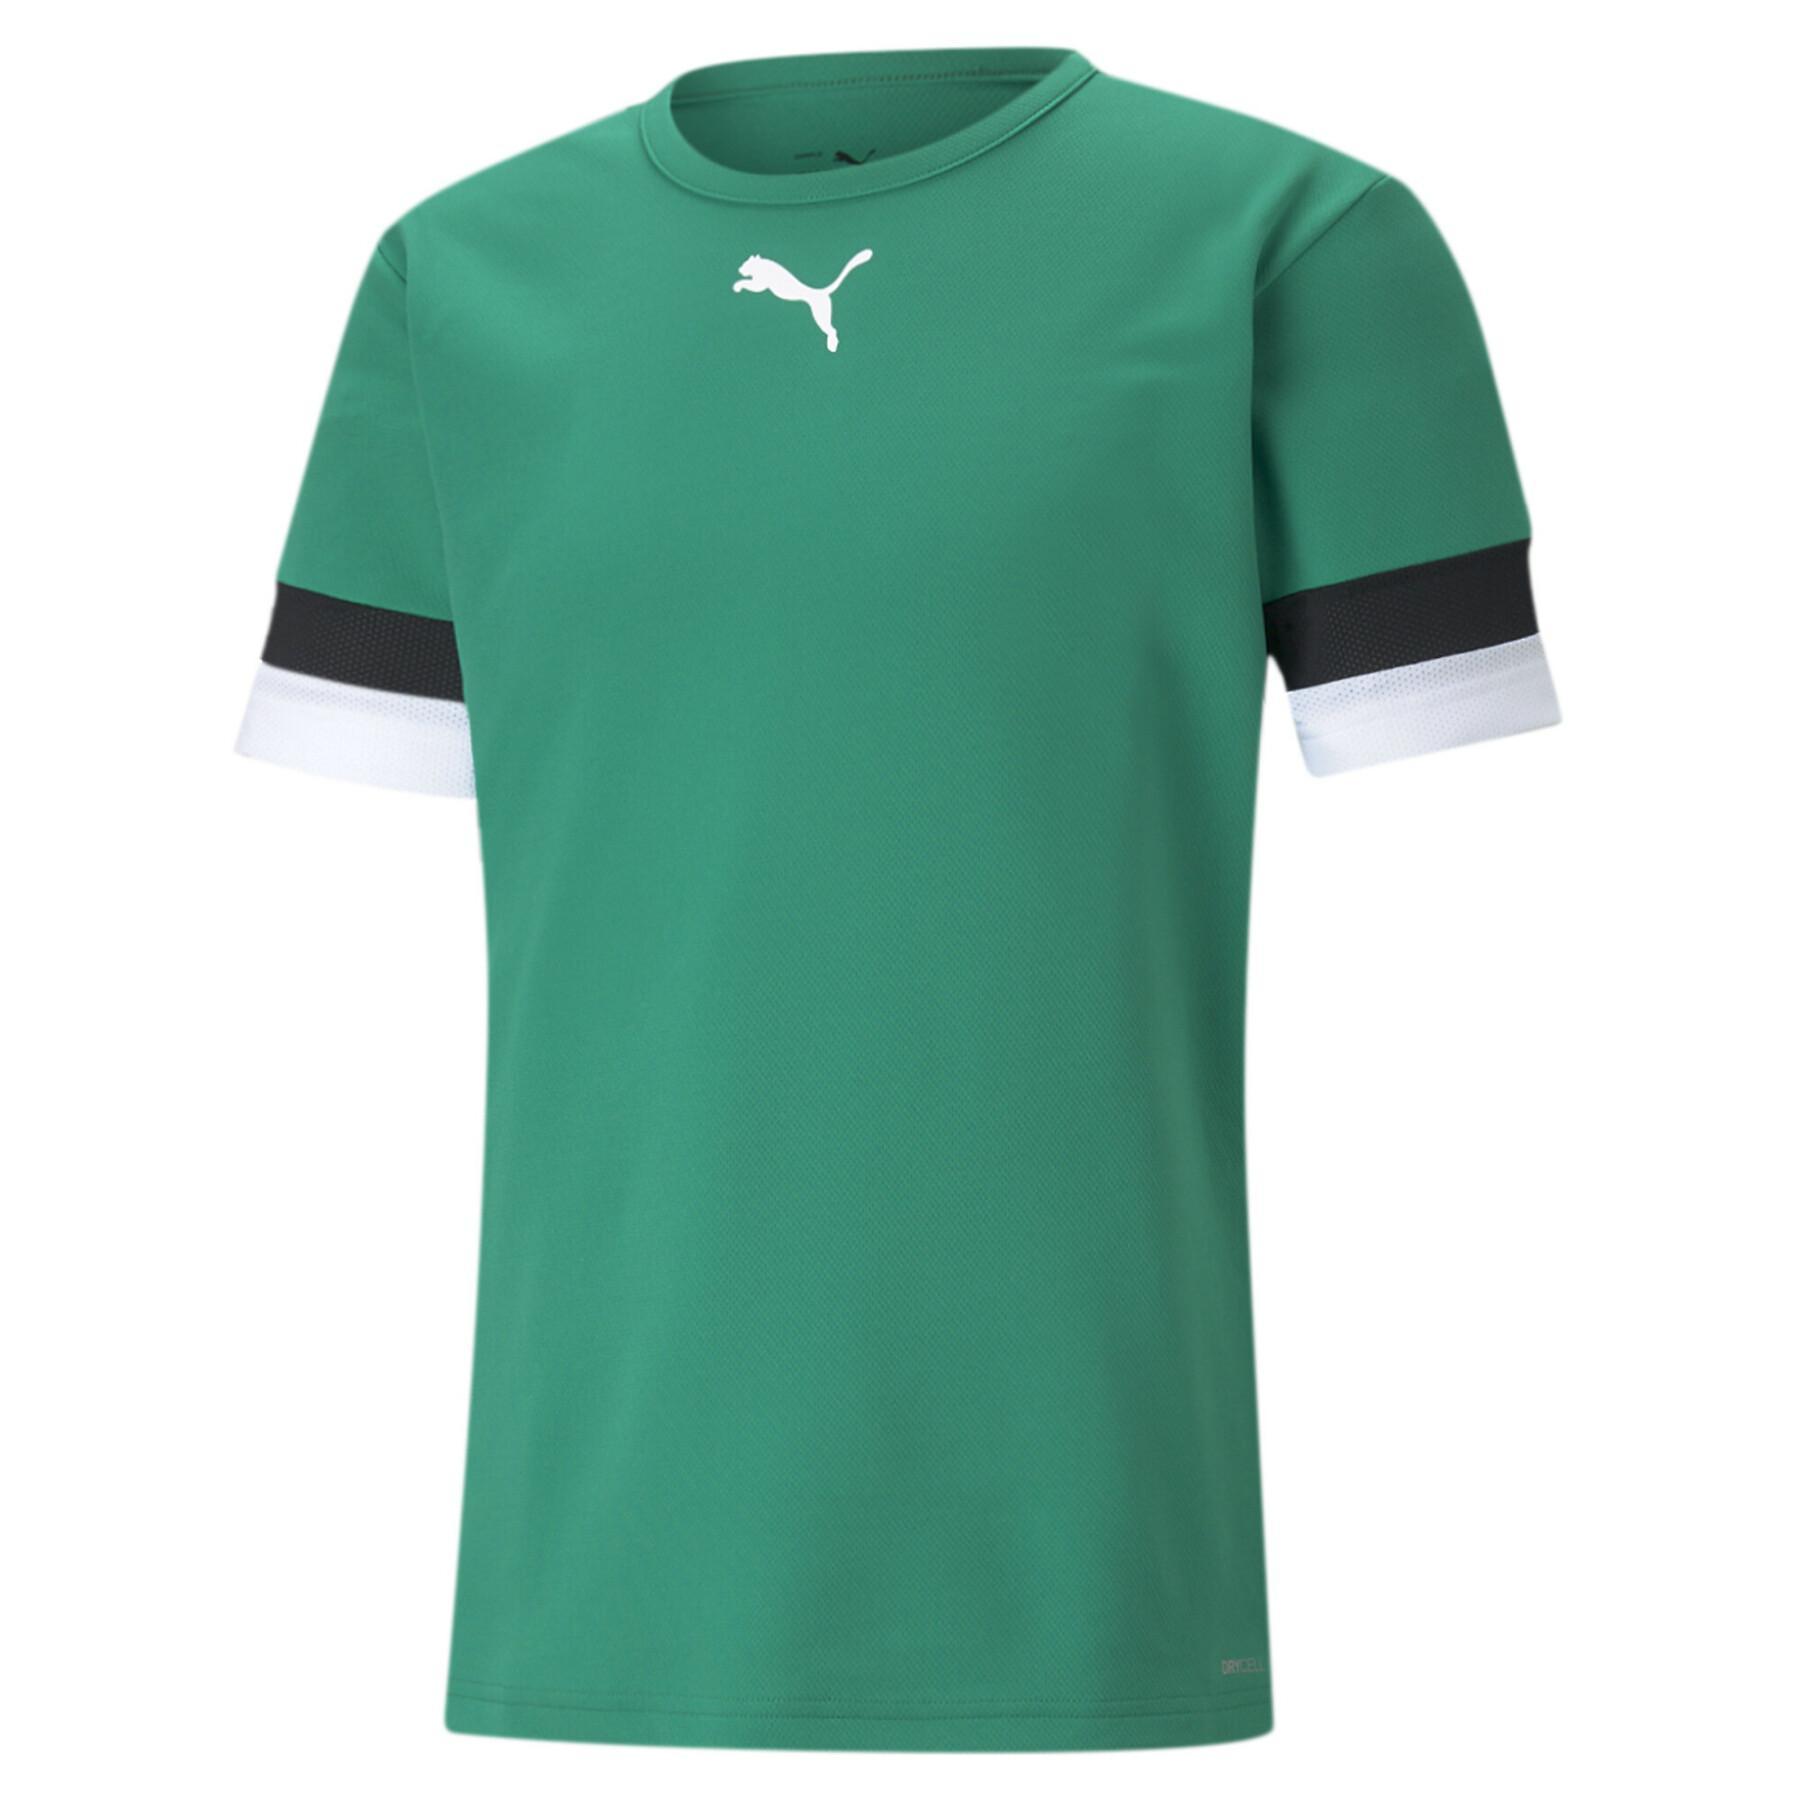 Camiseta Puma Team Rise - Puma - Camisetas de entrenamiento - Ropa de fútbol